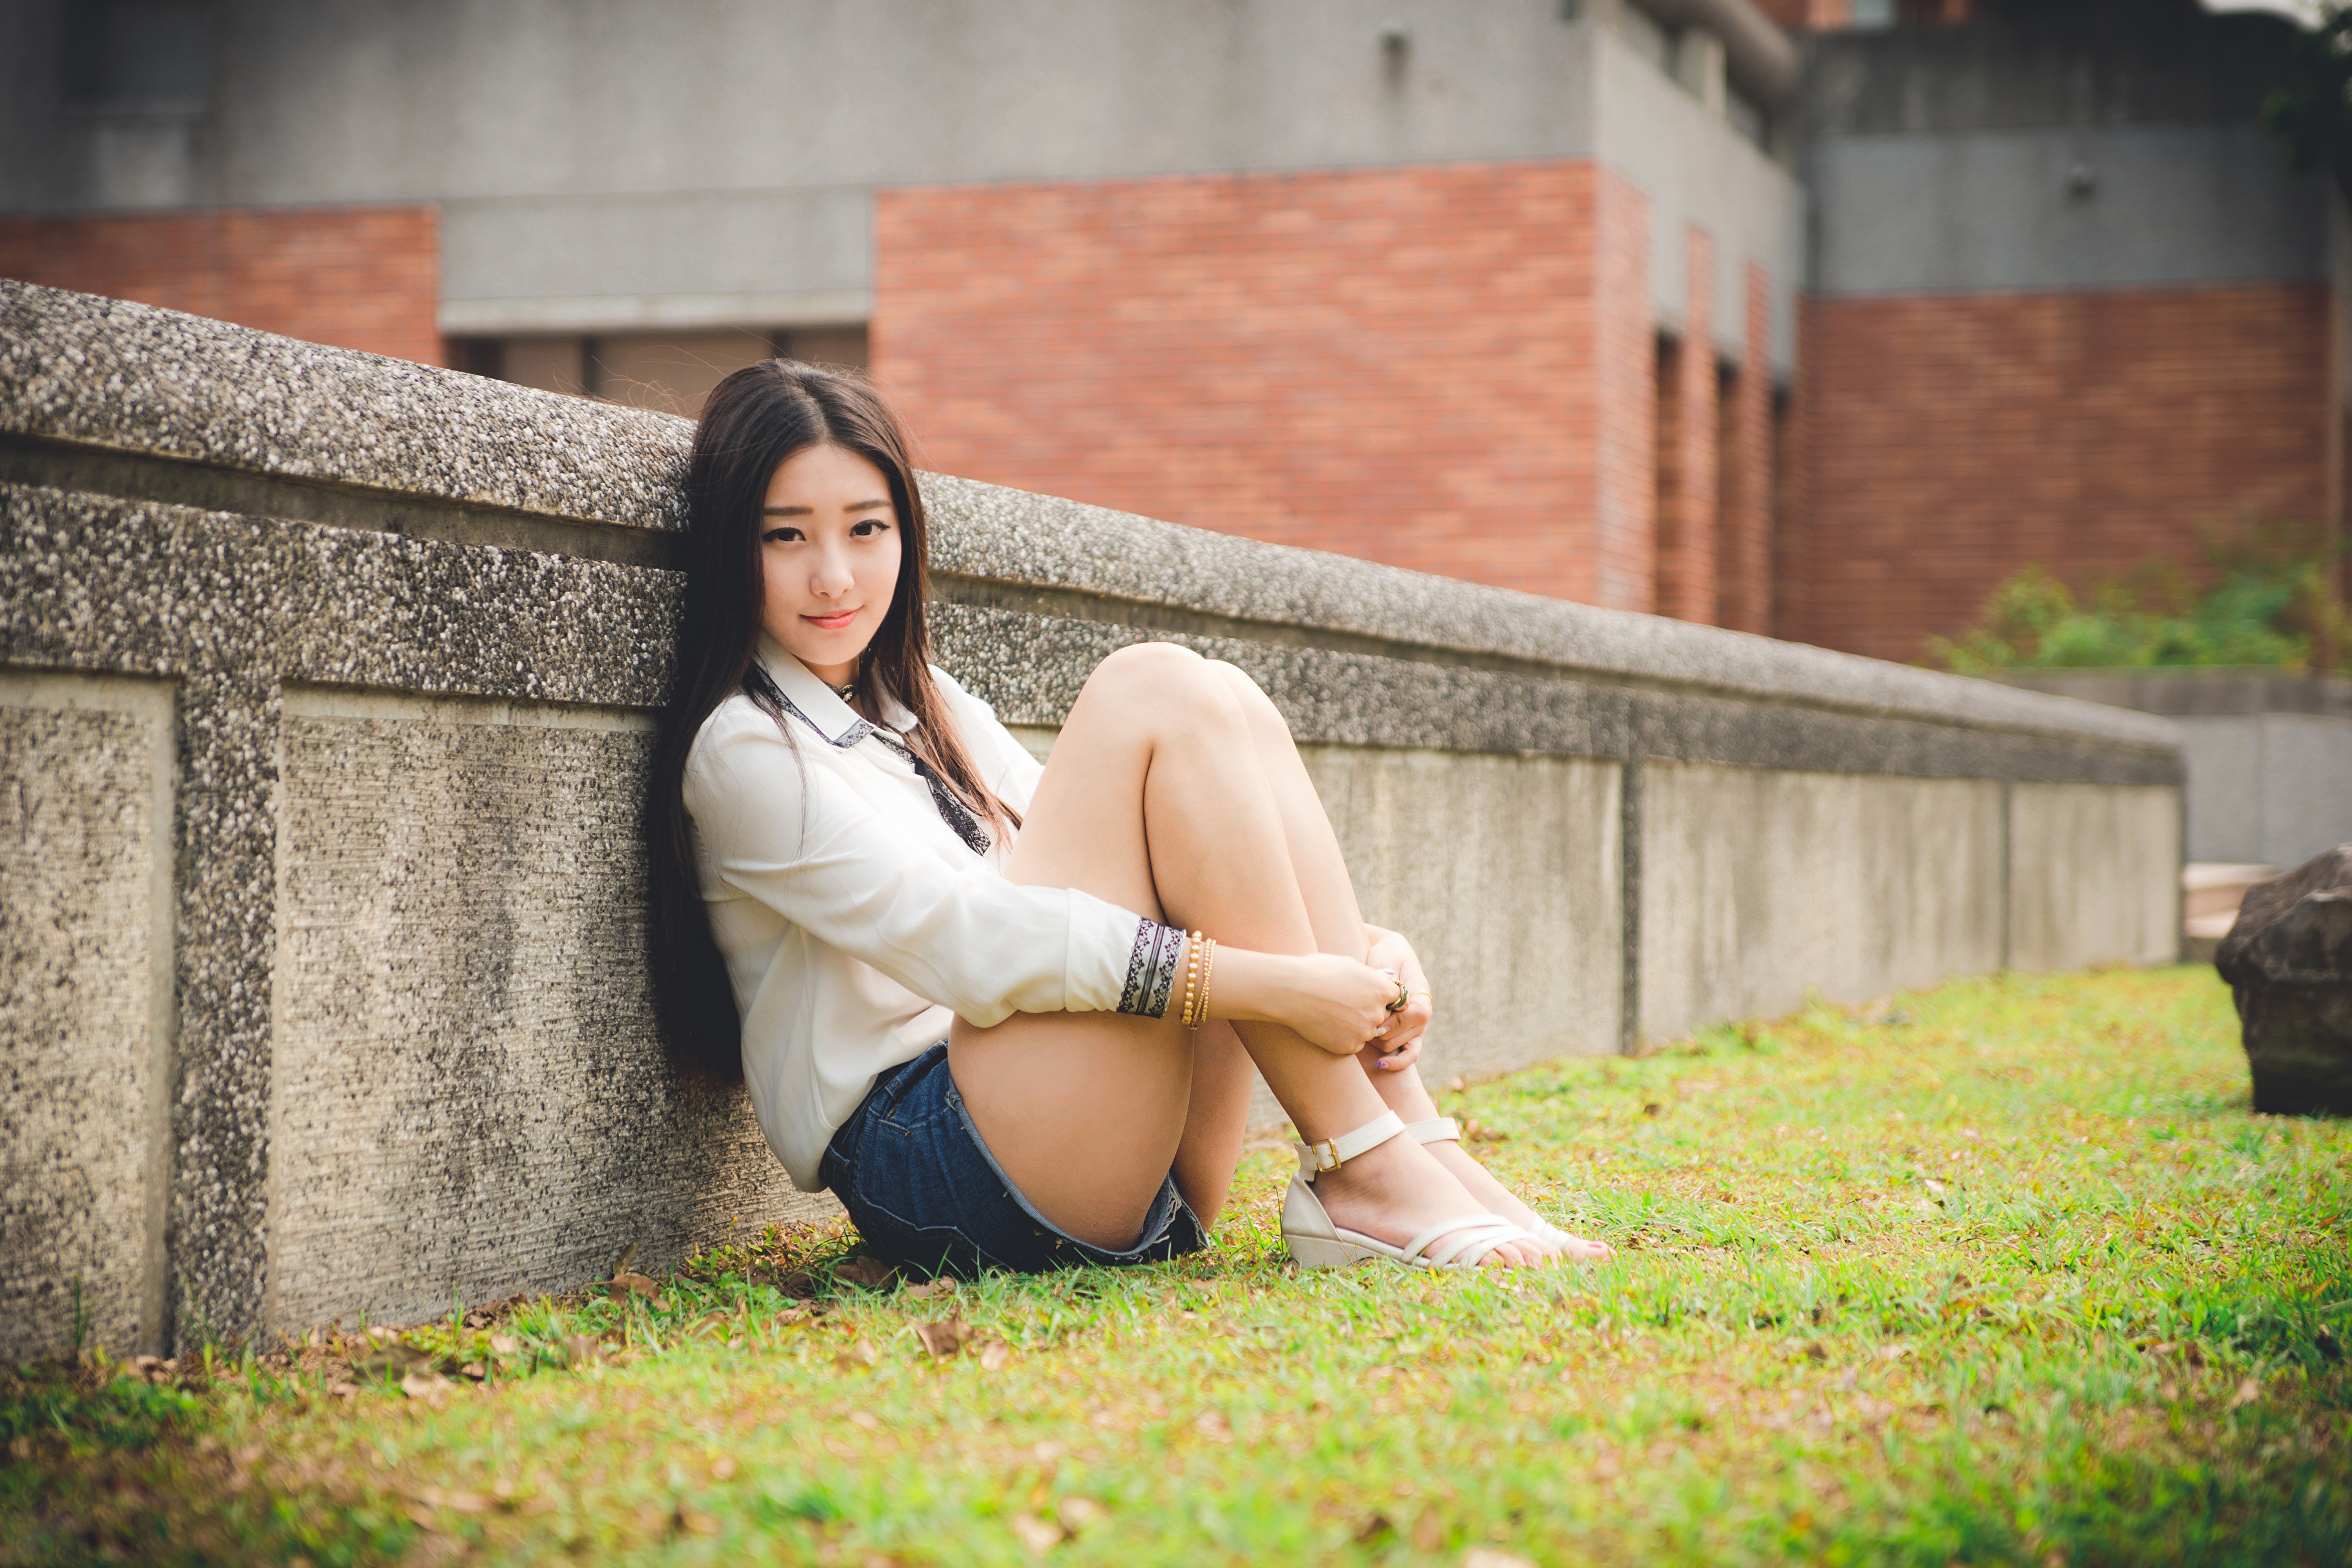 Asian Model Women Long Hair Dark Hair Depth Of Field Grass Sitting Leaning Wall Building Bricks Brac 3840x2560